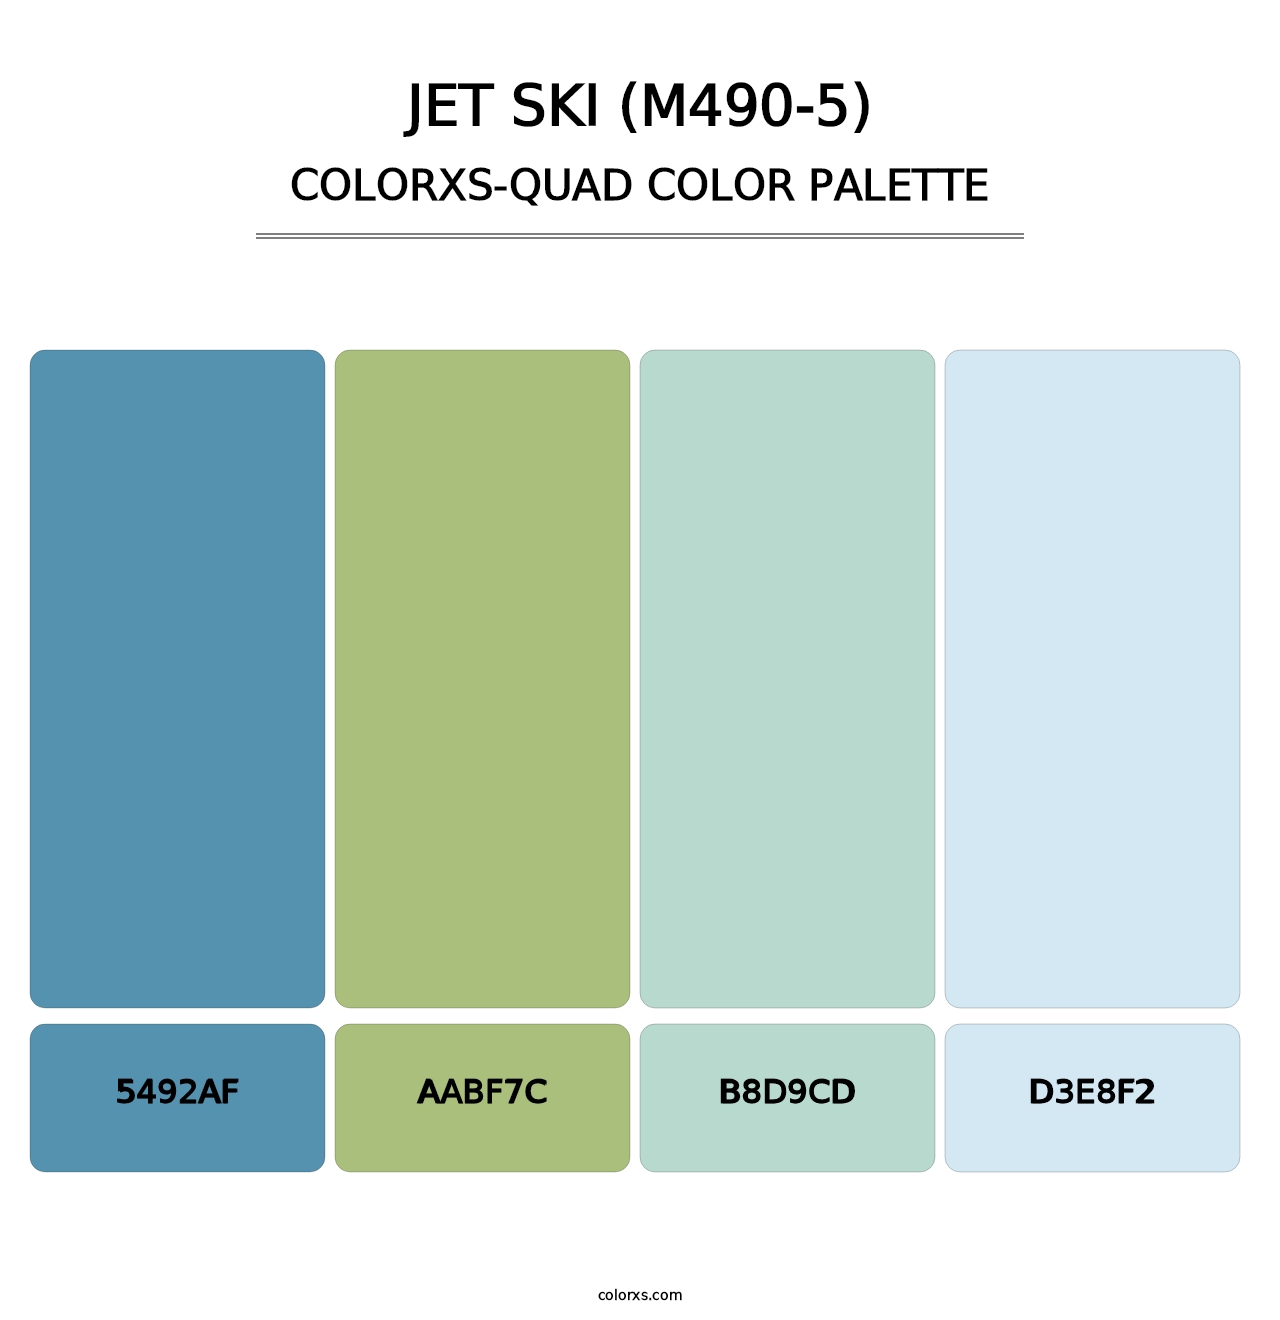 Jet Ski (M490-5) - Colorxs Quad Palette